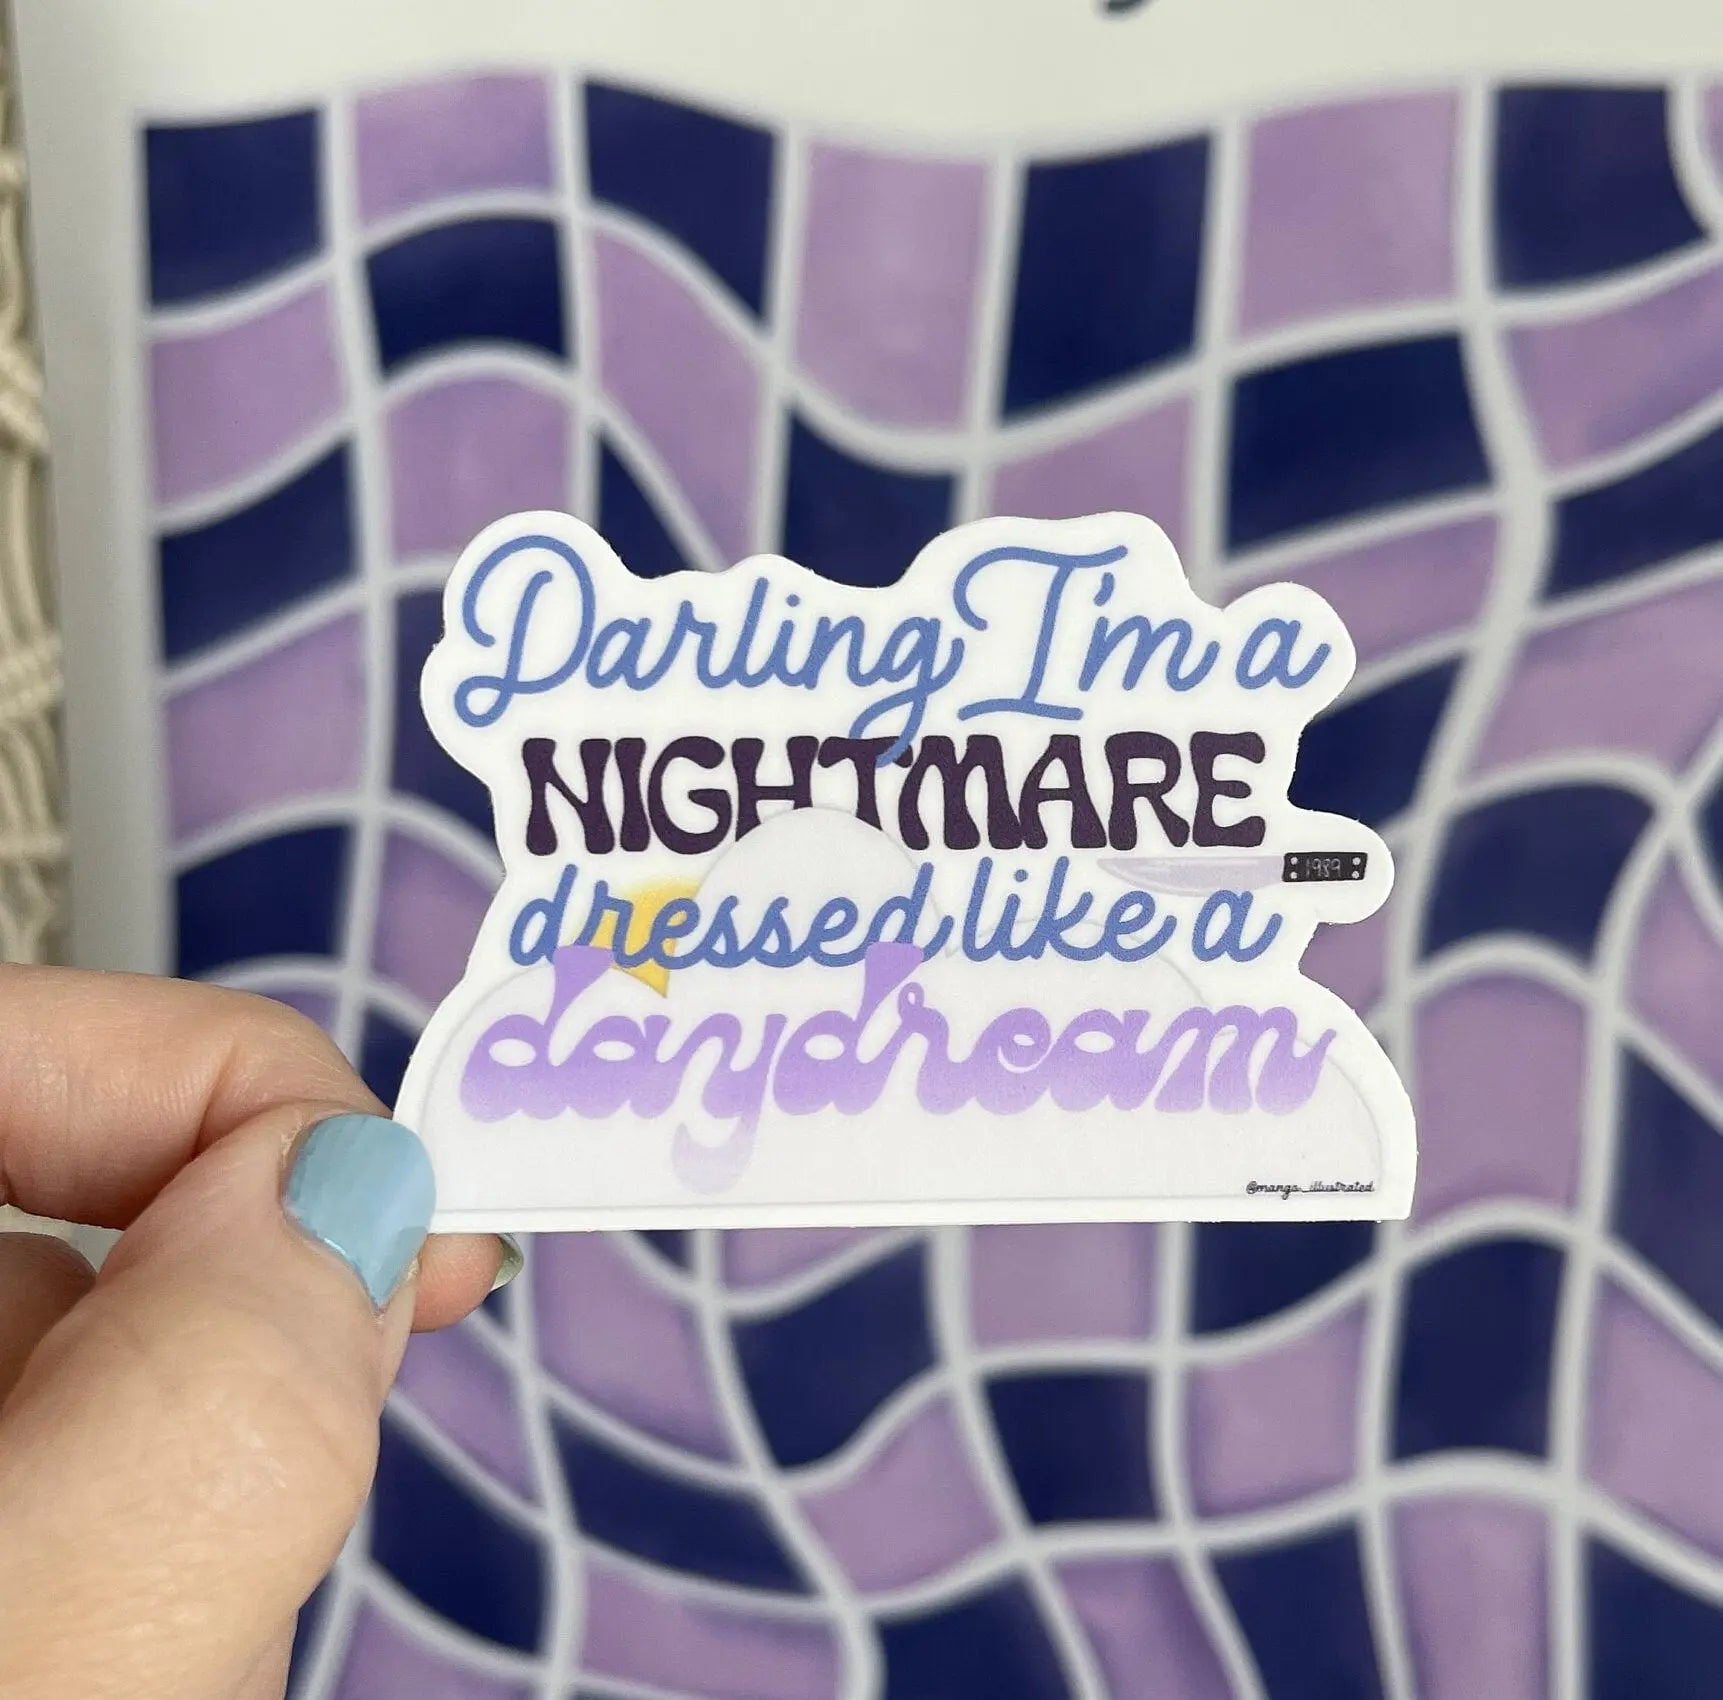 Darling I'm a nightmare dressed like a daydream sticker MangoIllustrated